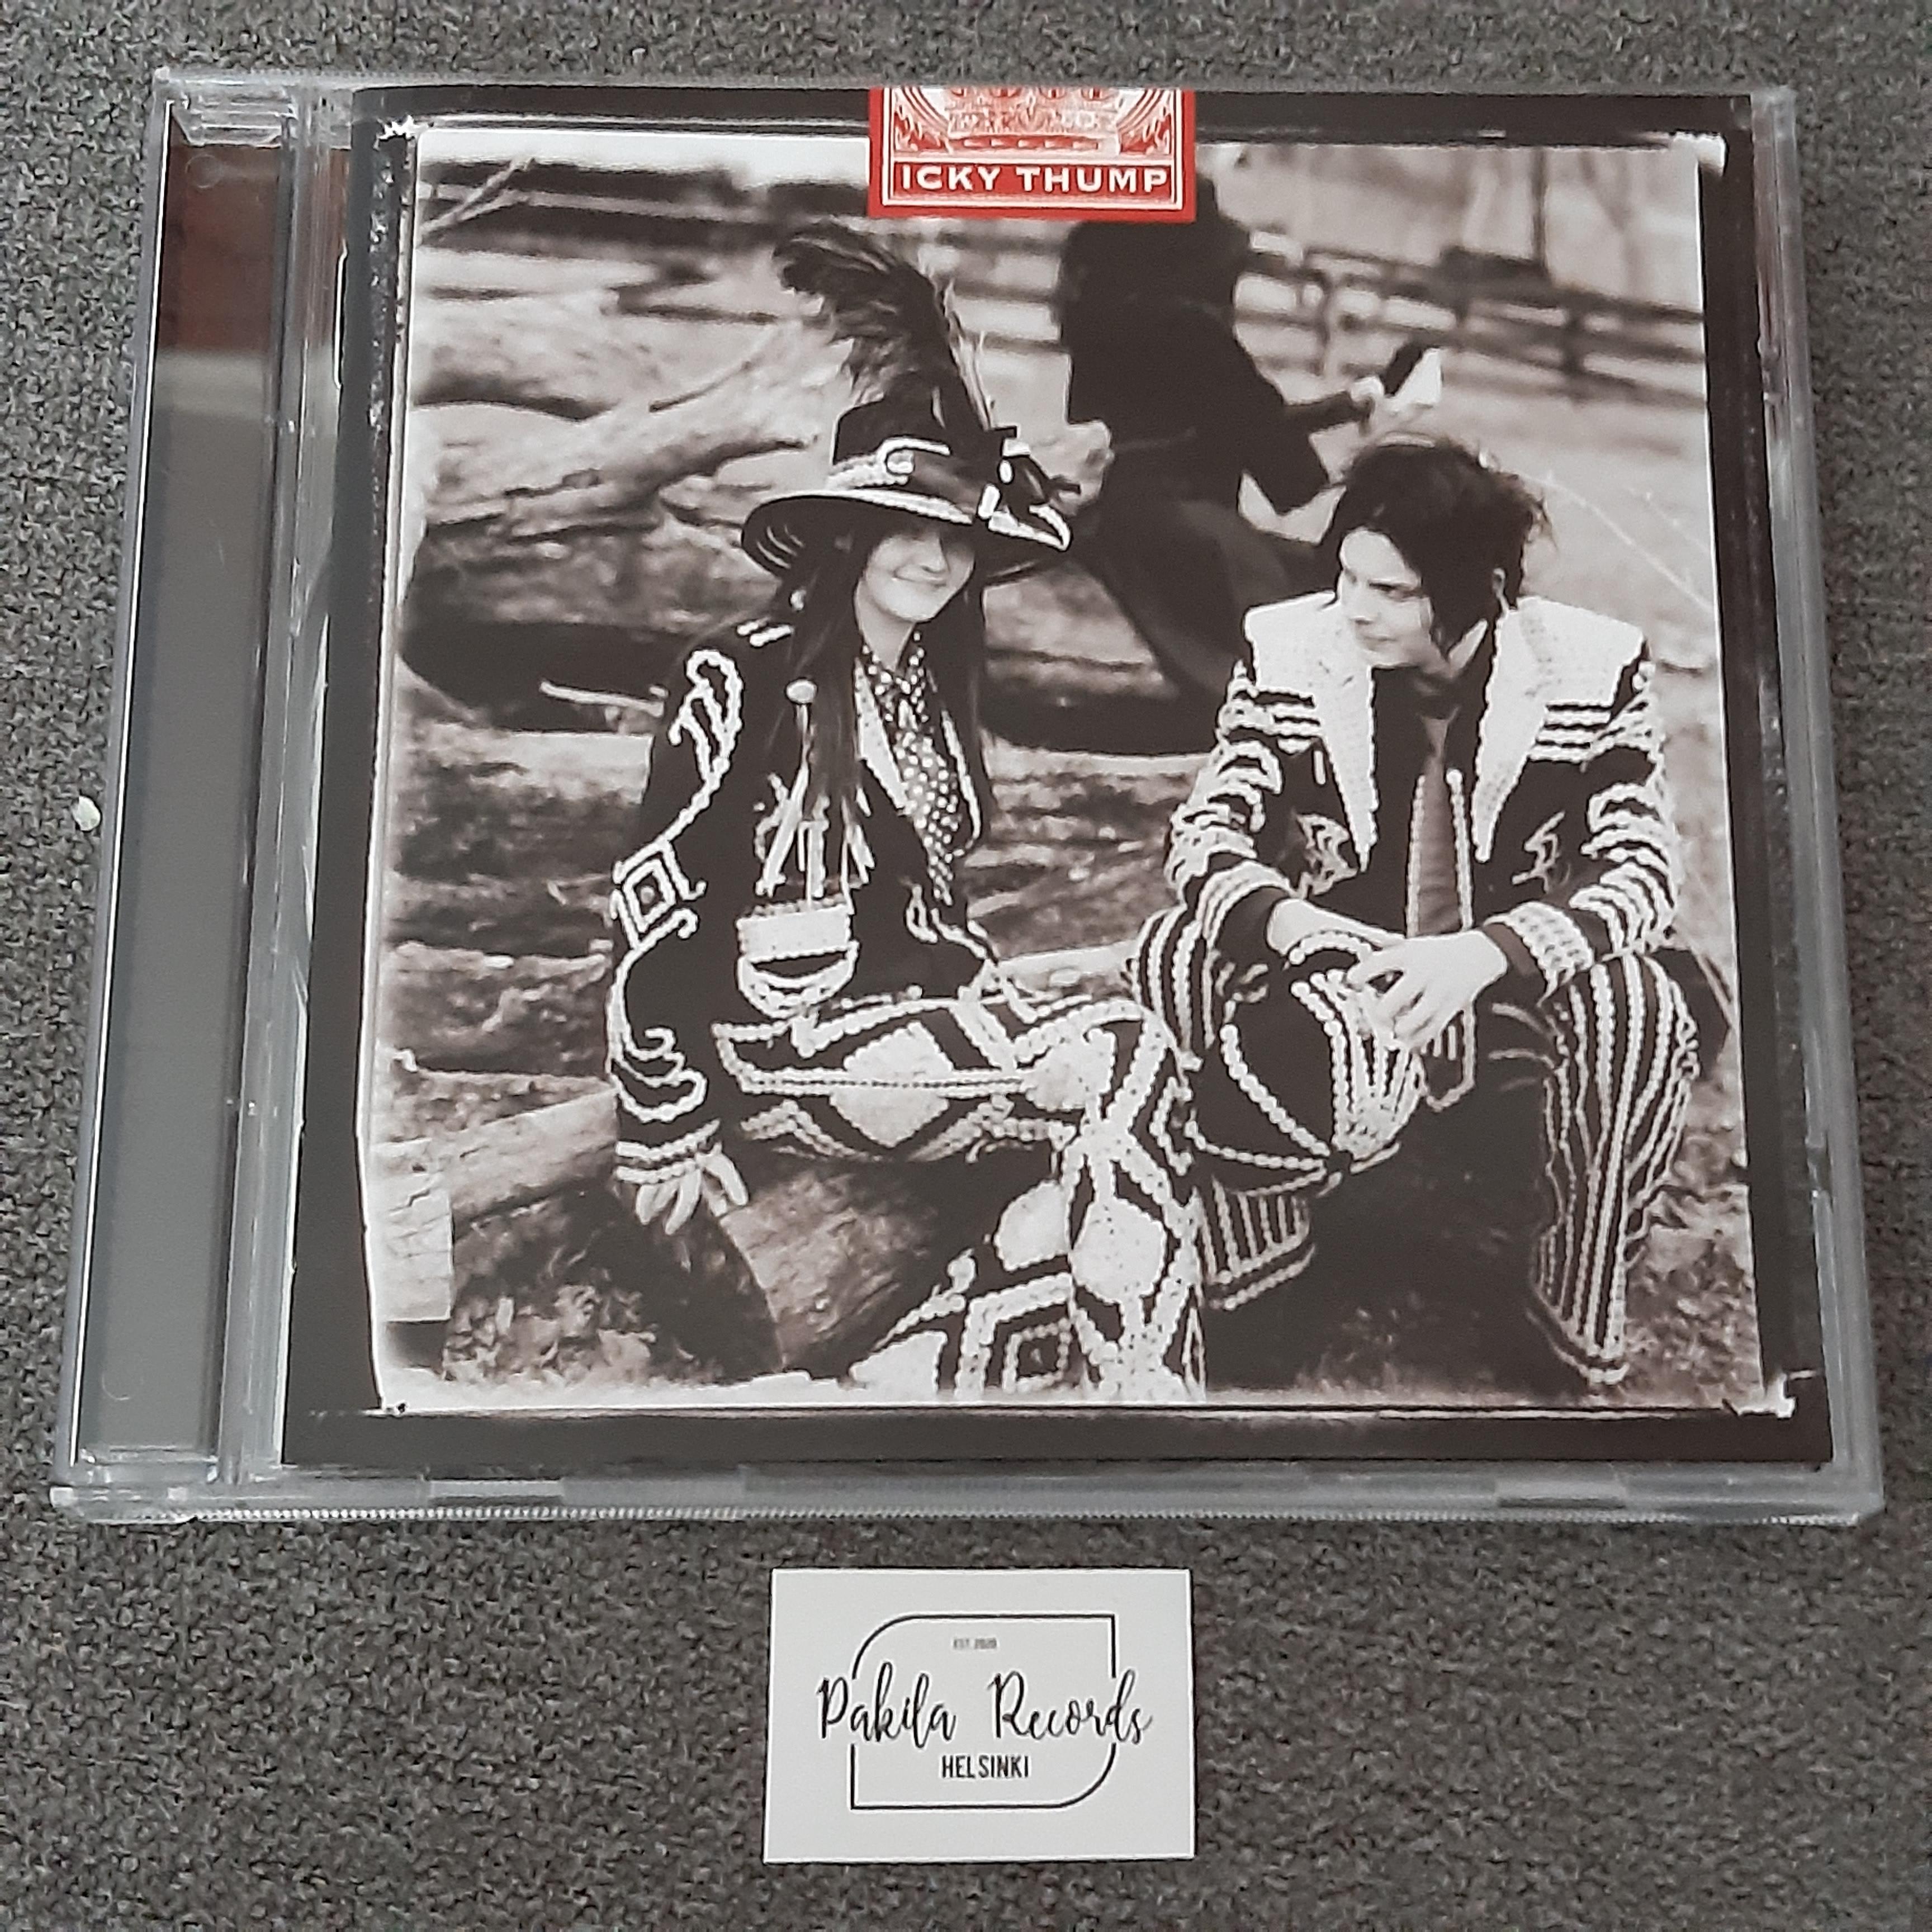 The White Stripes - Icky Thump - CD (käytetty)